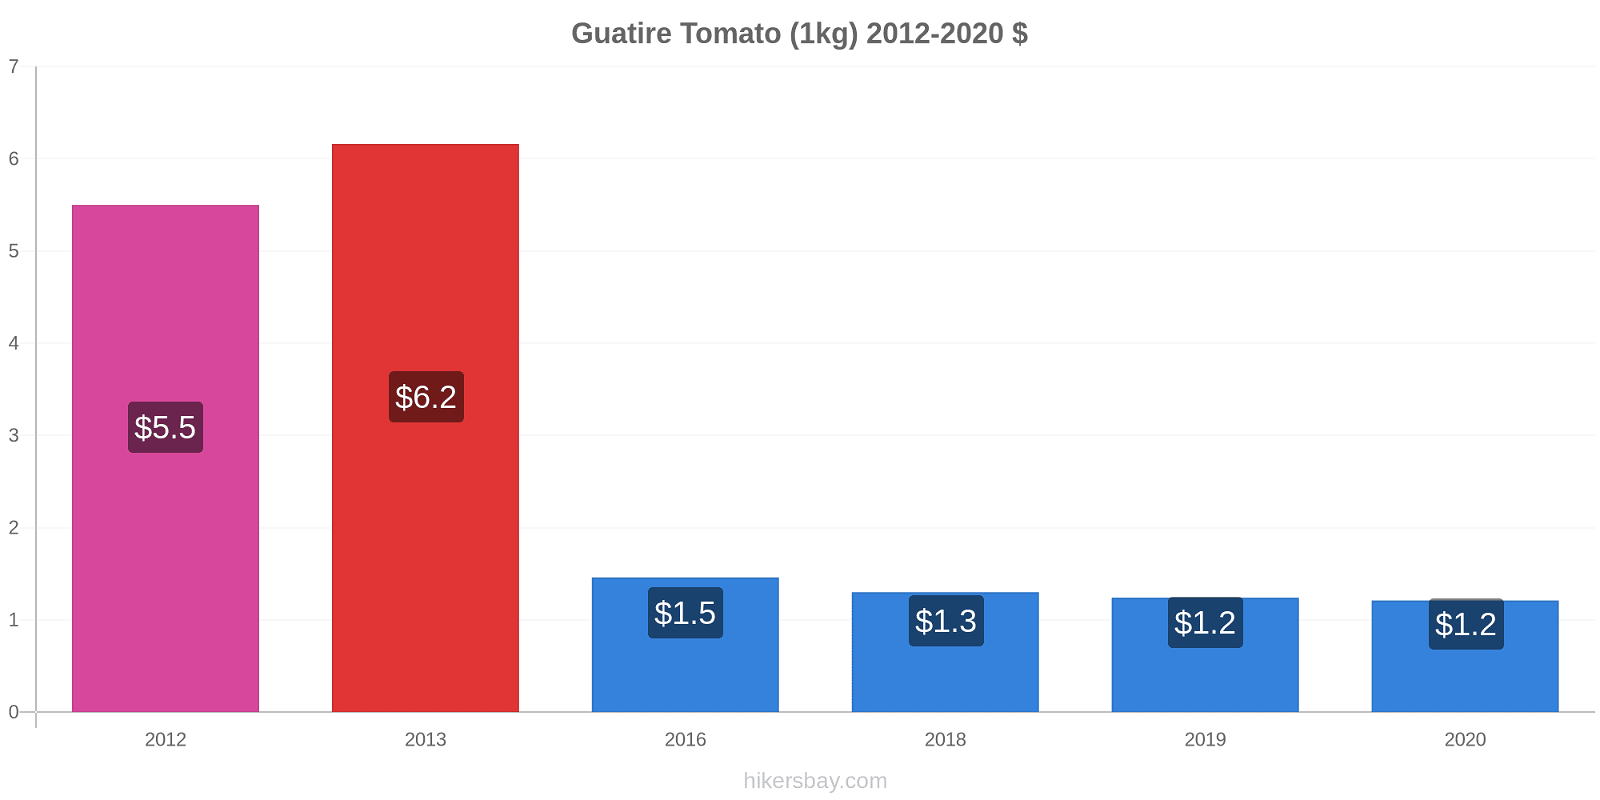 Guatire price changes Tomato (1kg) hikersbay.com